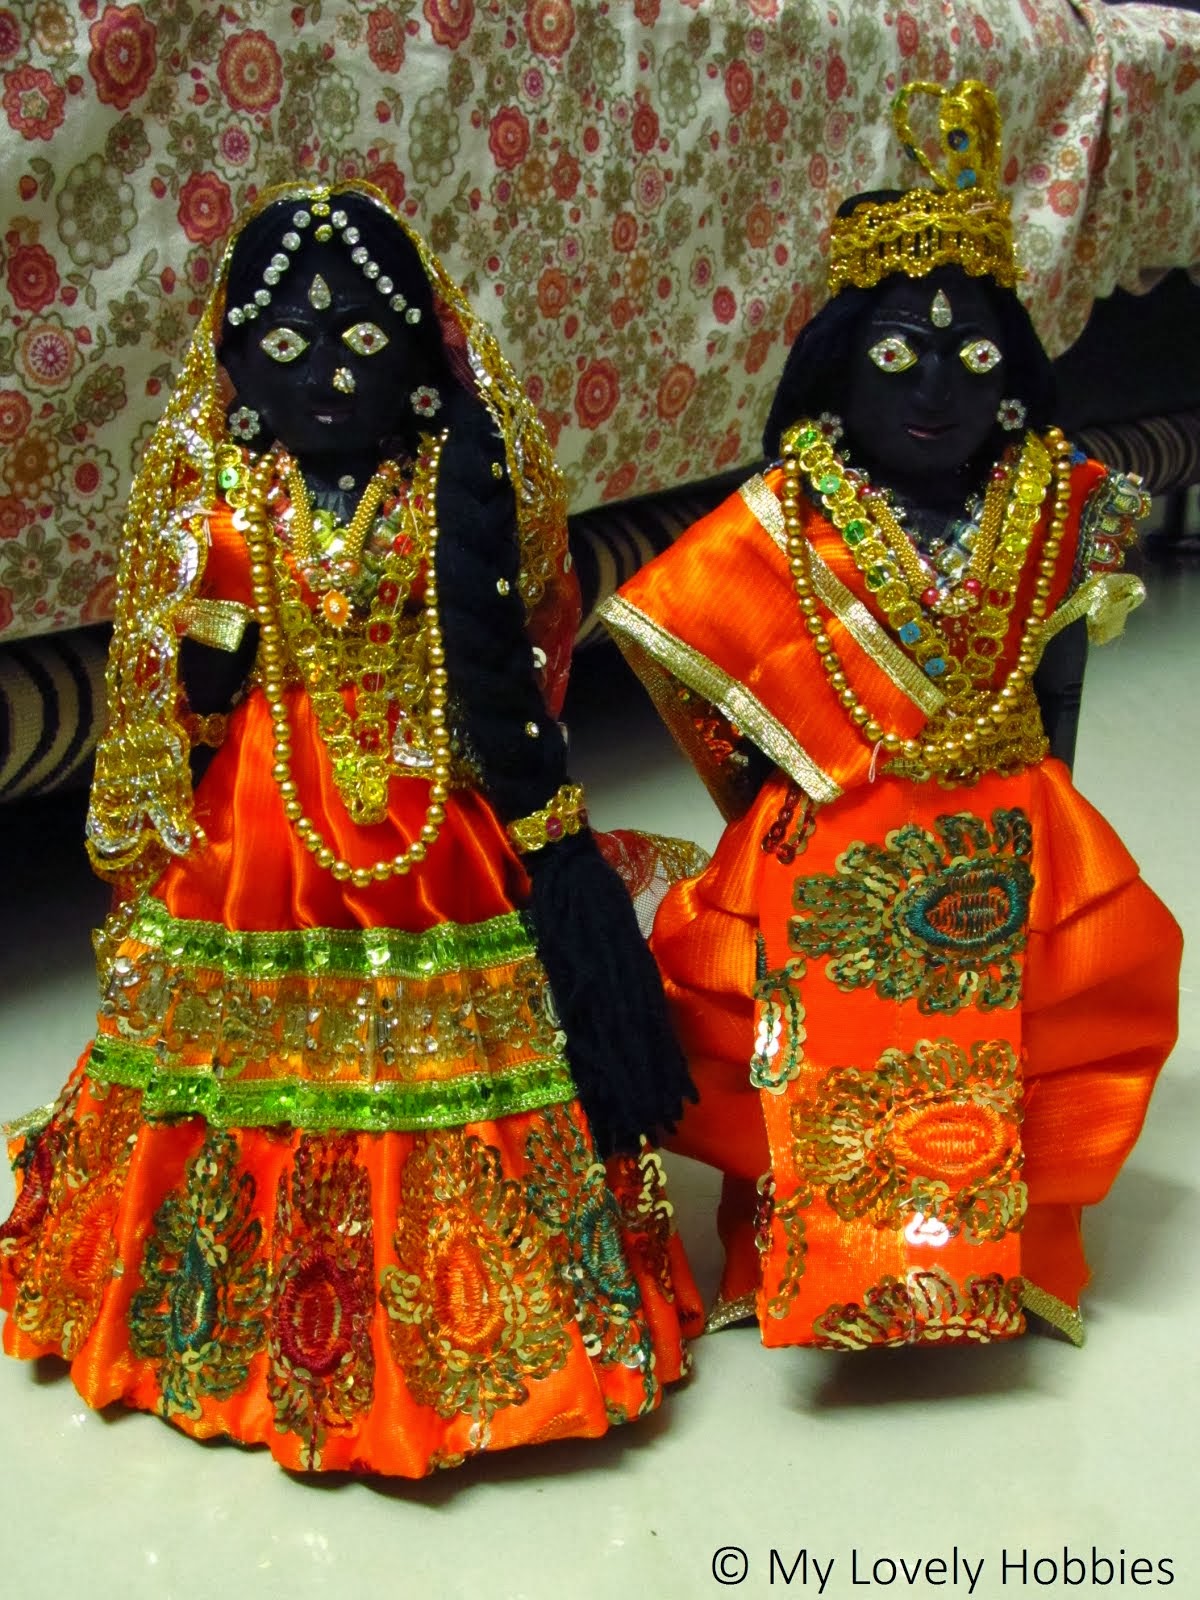 Marapachi dolls